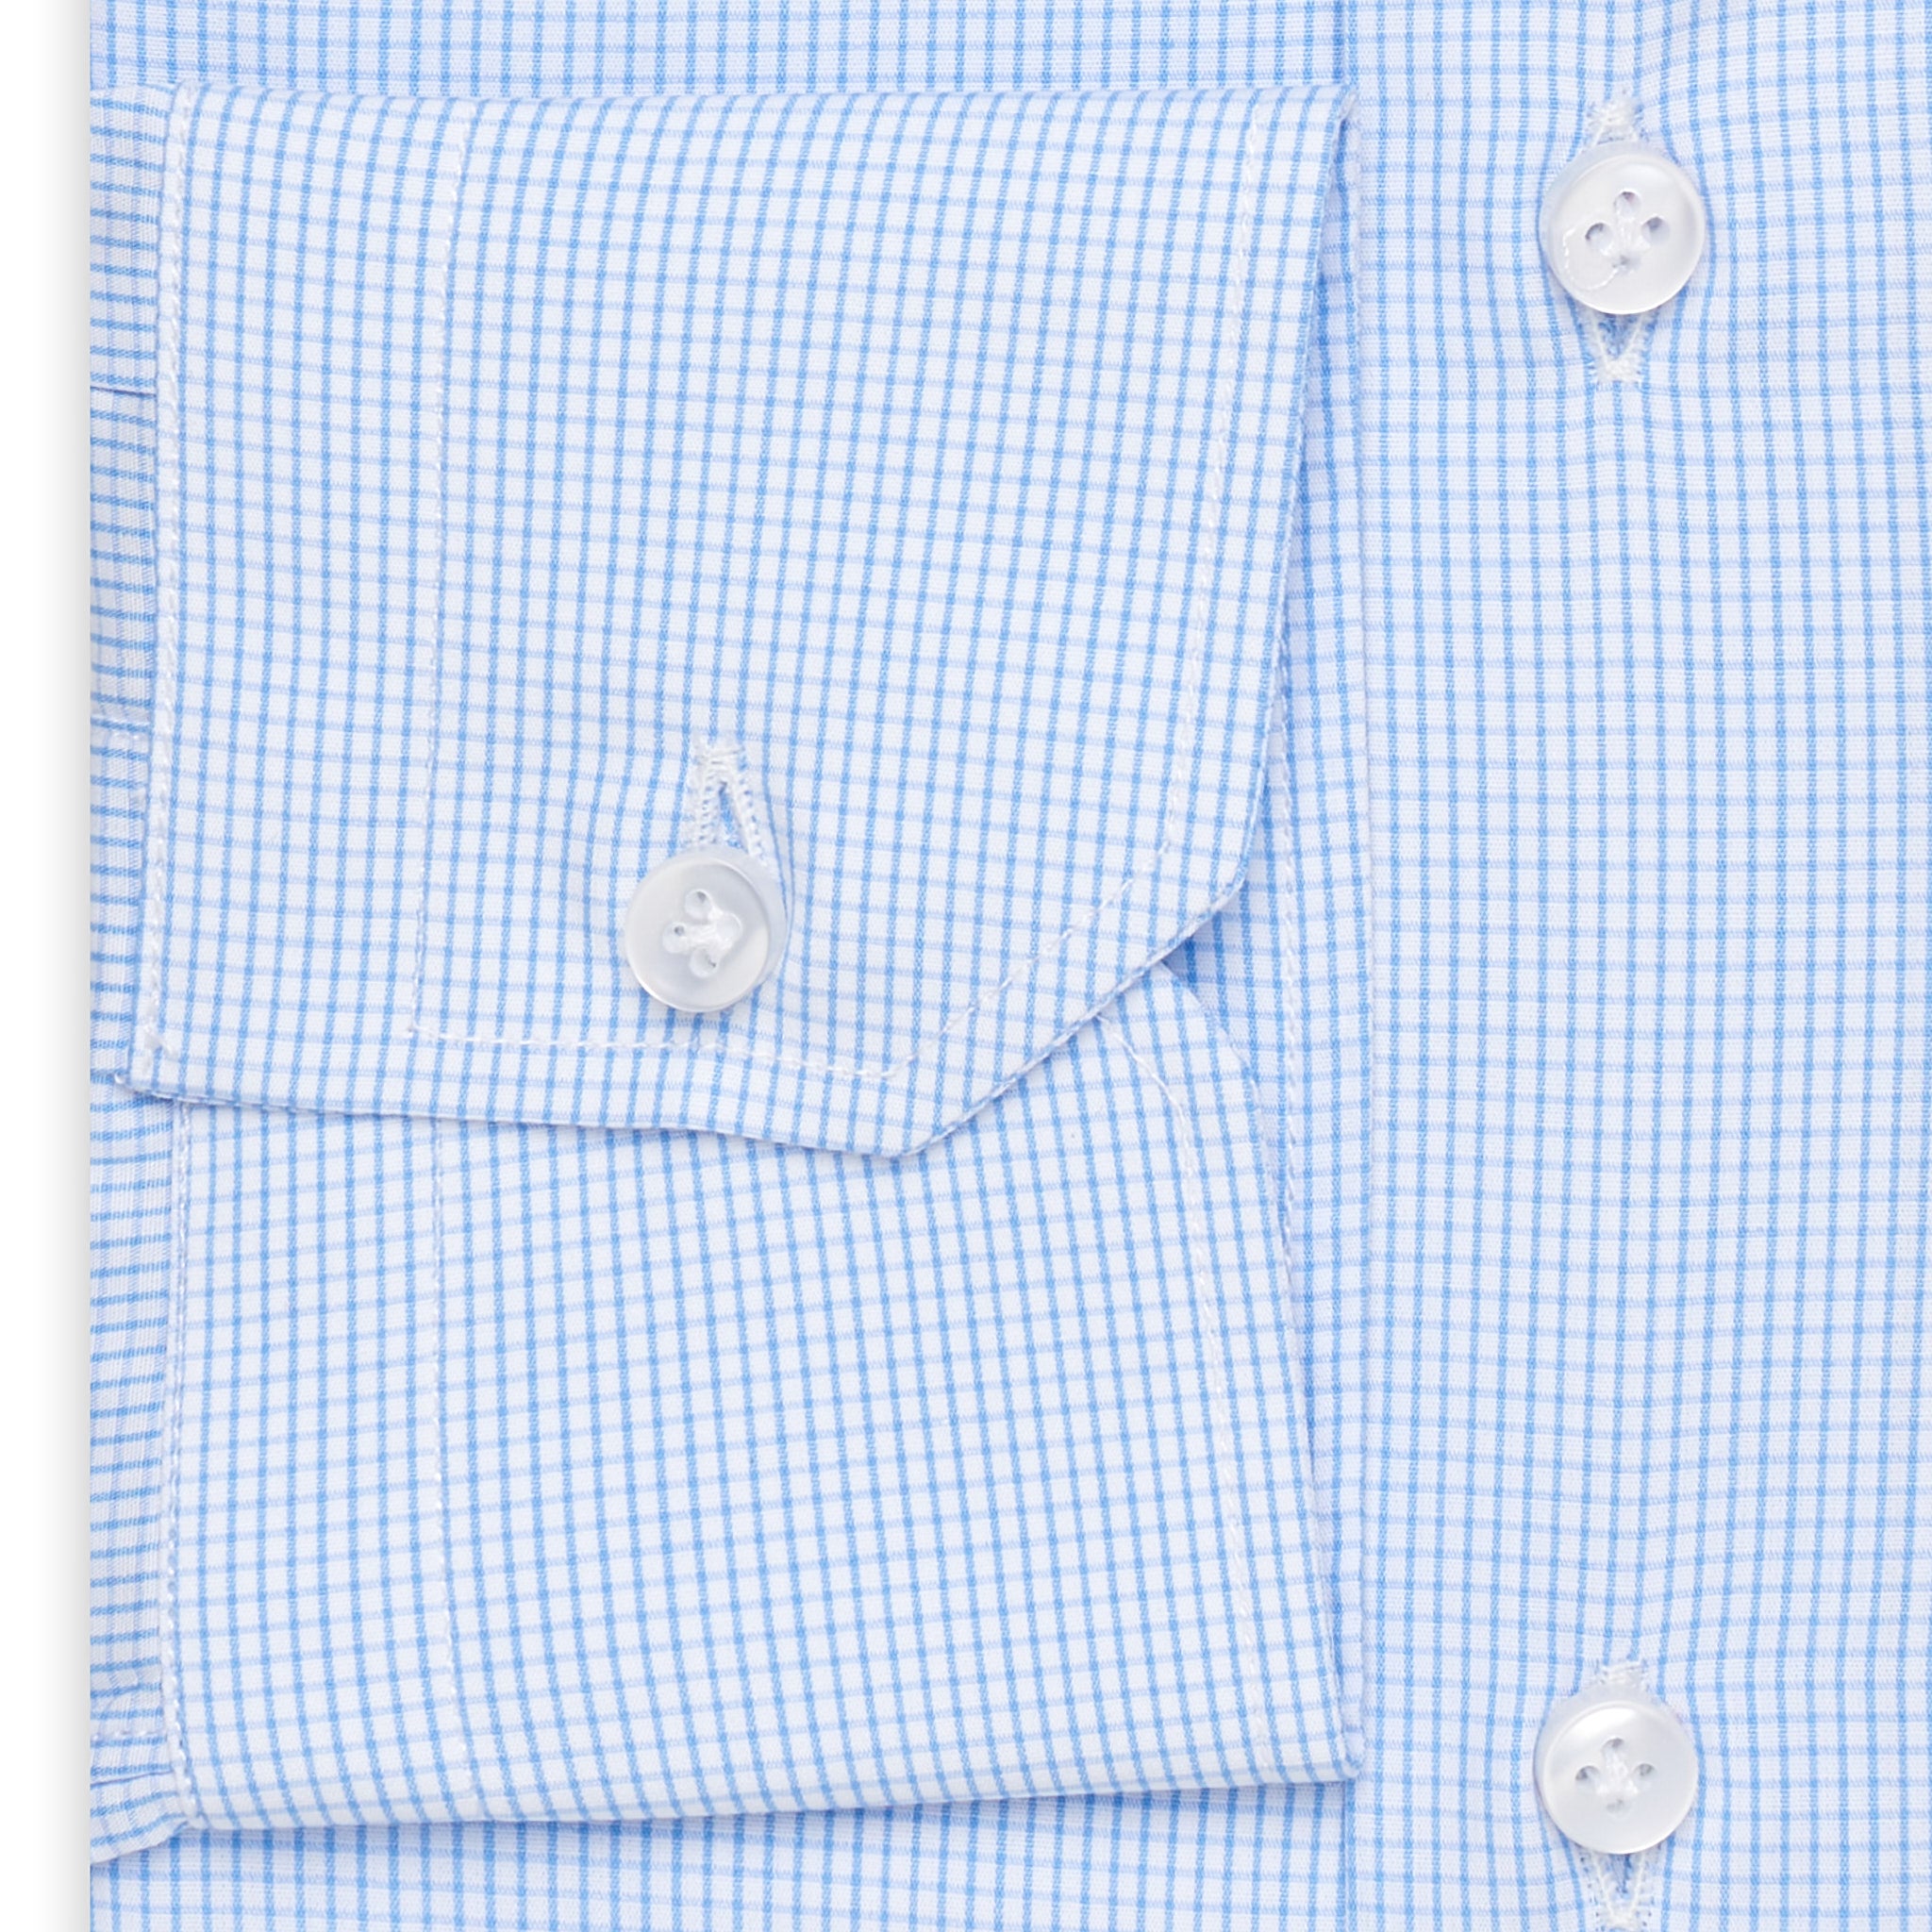 SARTORIO by KITON Light Blue Checkered Cotton Dress Shirt NEW Slim Fit 39 SARTORIO